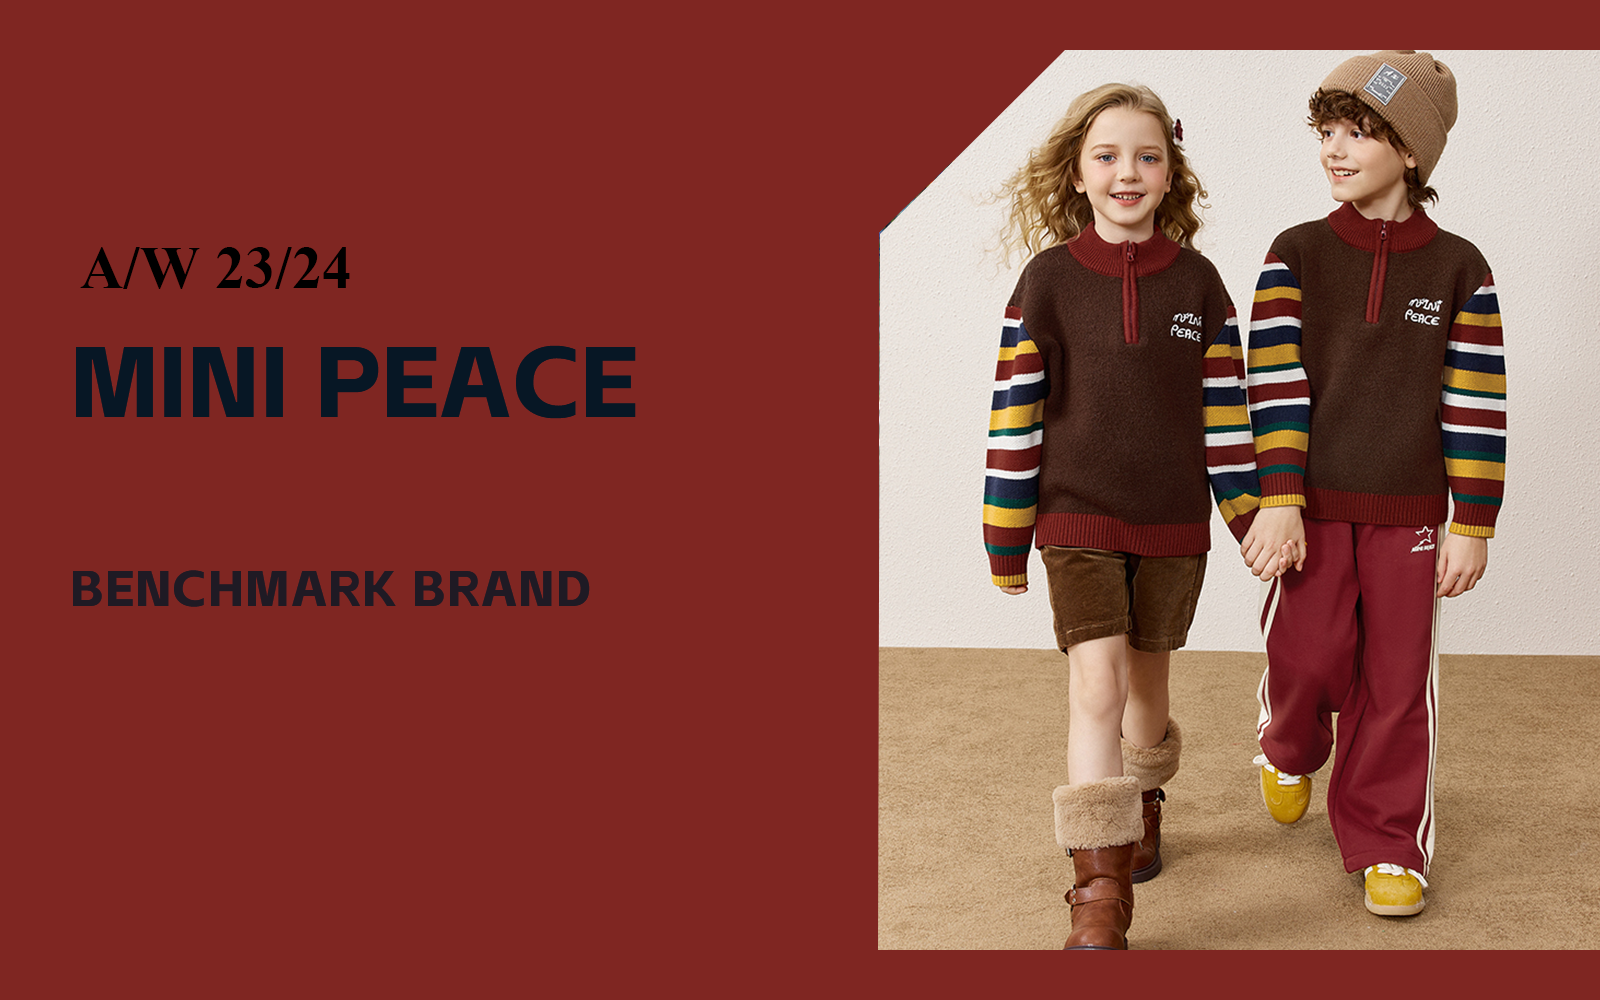 Maillard Trend -- The Analysis of Mini Peace The Benchmark Kidswear Brand